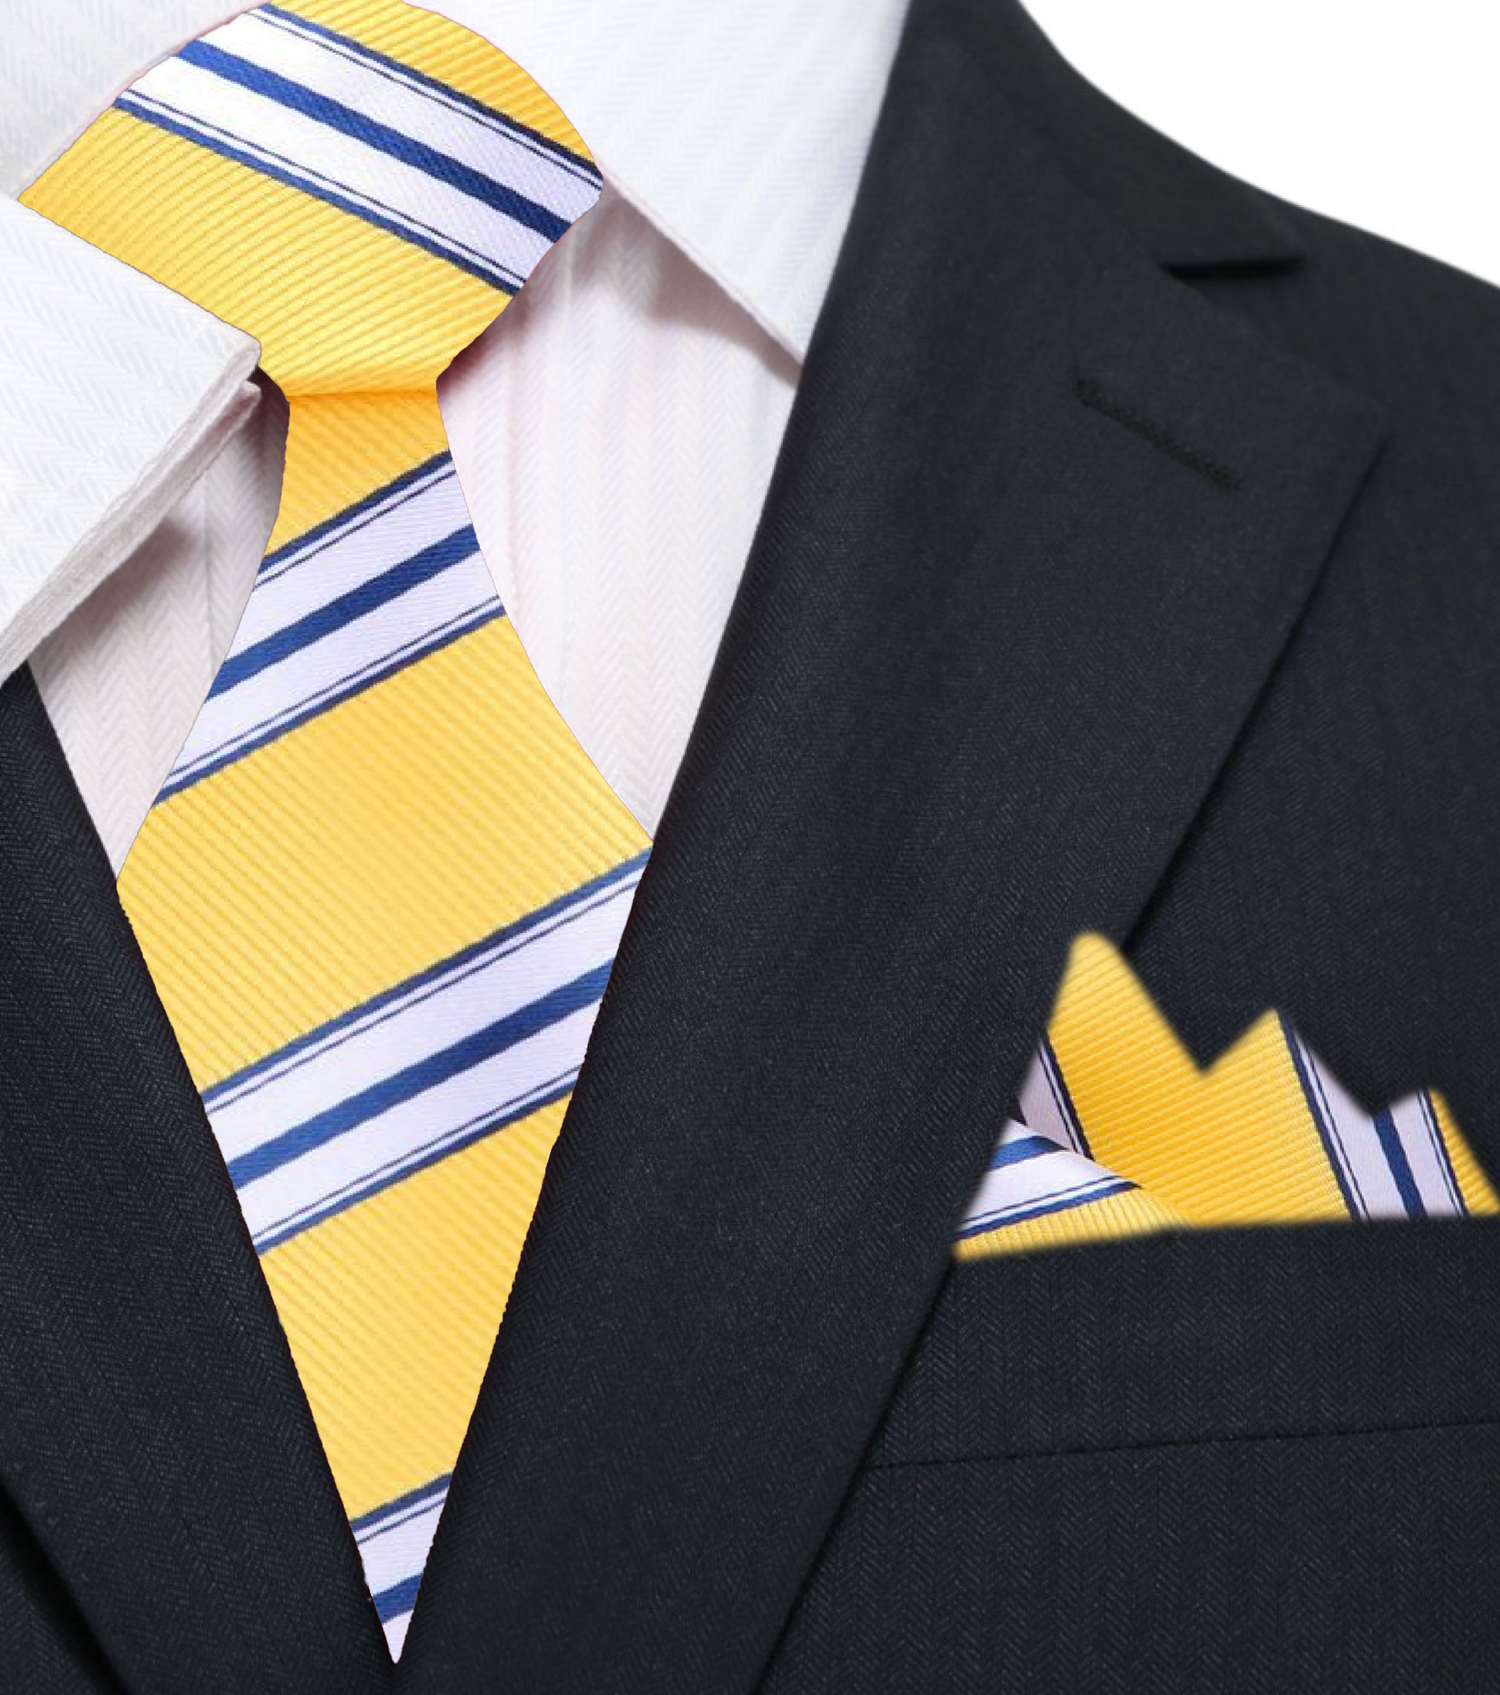 Main Yellow Stripe Tie and Square||Yellow, White